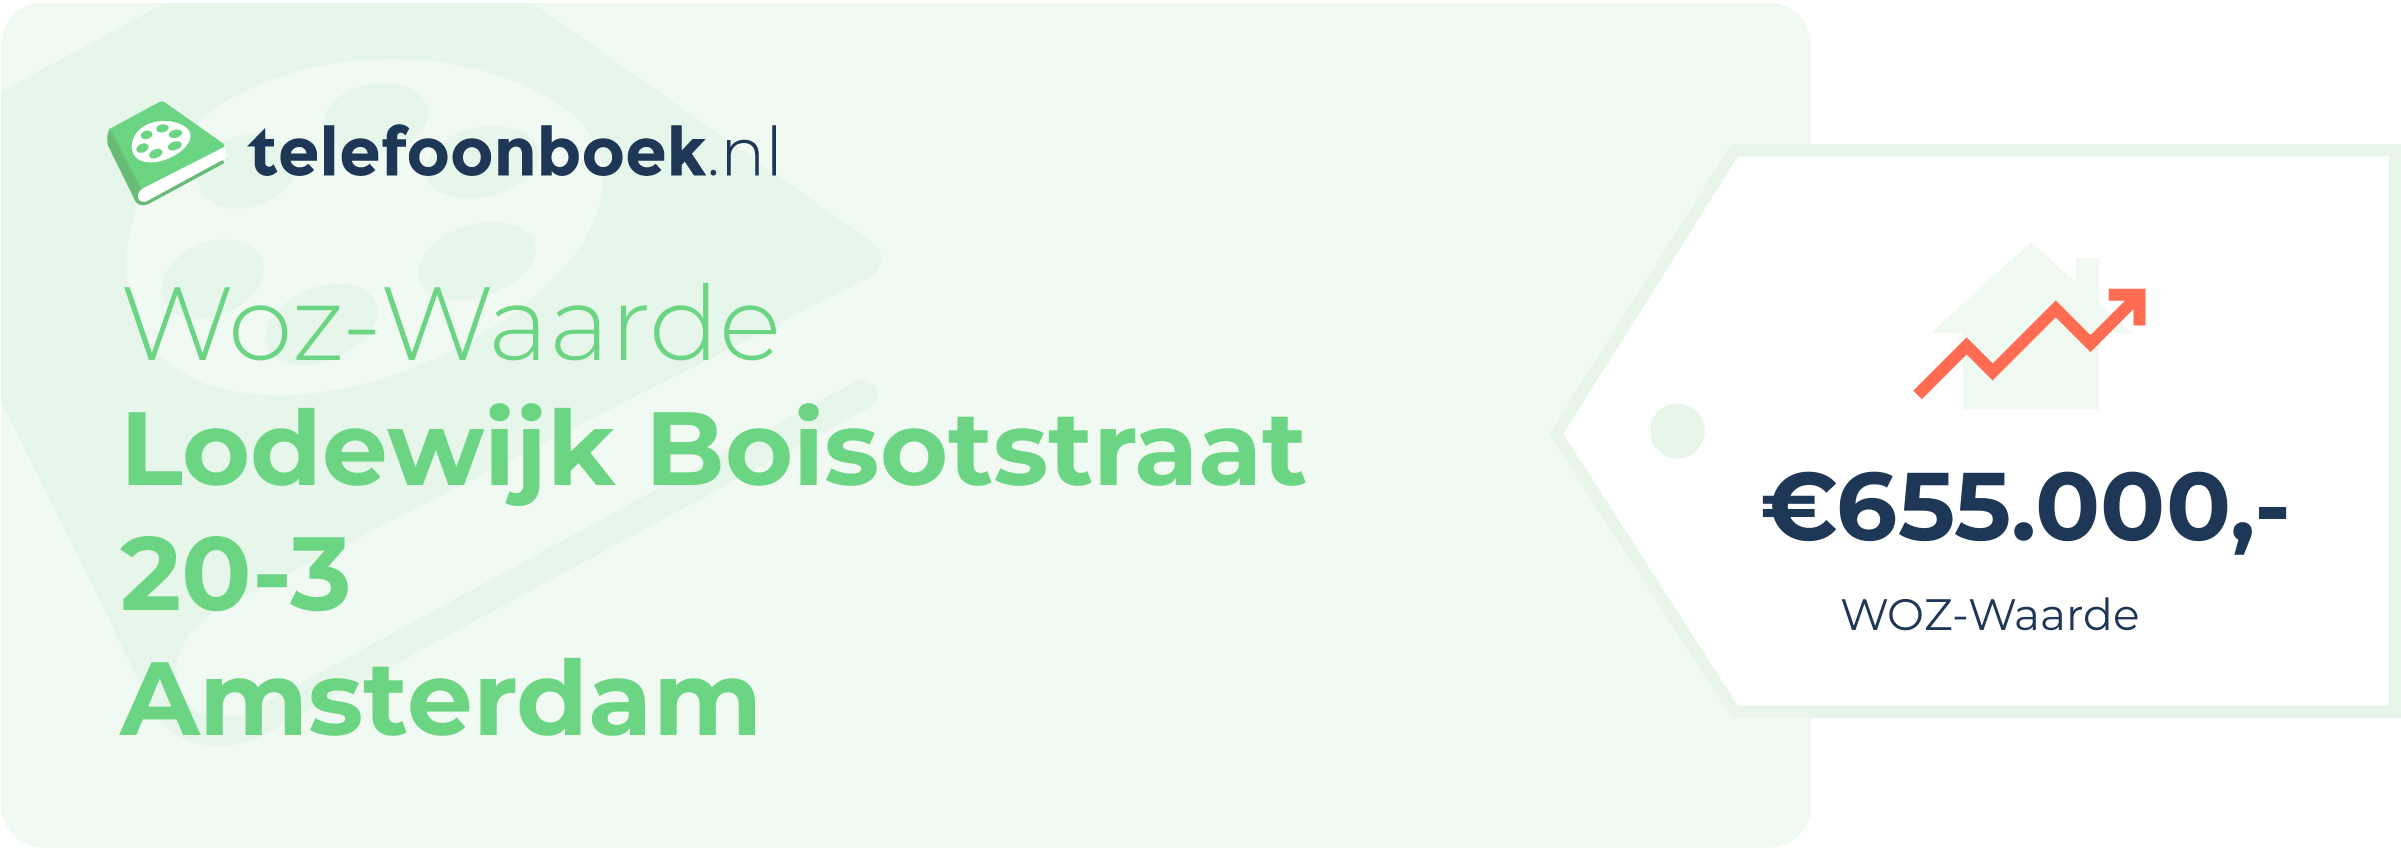 WOZ-waarde Lodewijk Boisotstraat 20-3 Amsterdam